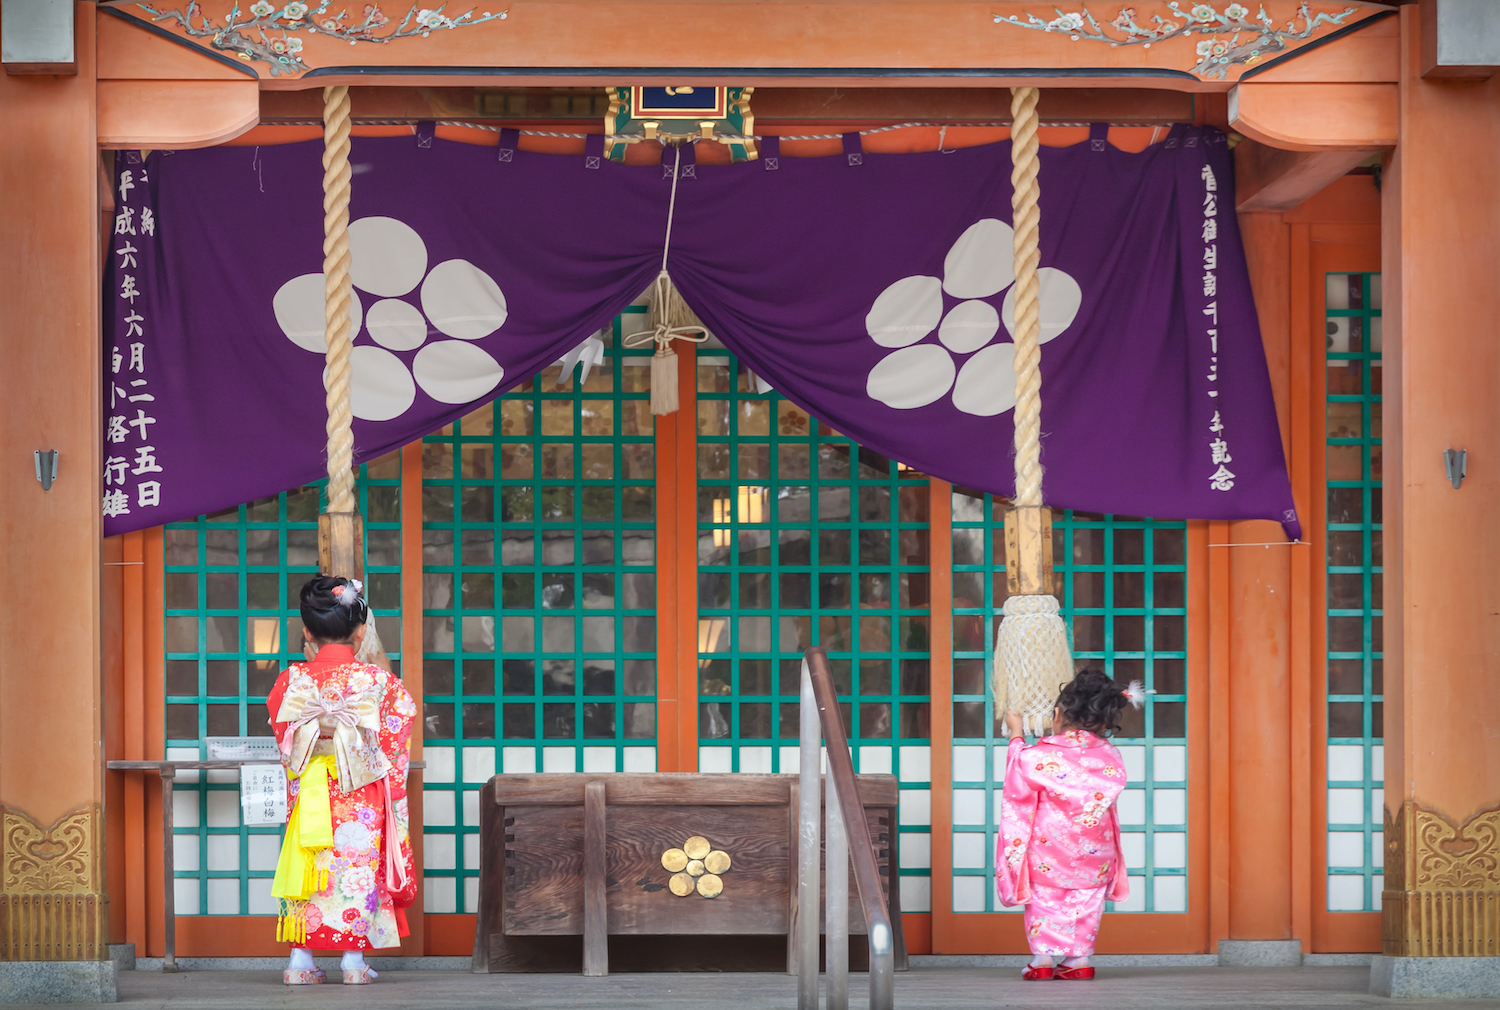 Kyoto, Japan - November 25, 2018: Two girls dressed in traditional clothes visit the Nagaoka Tenmangu shrine for "Shichi-go-san" Festival